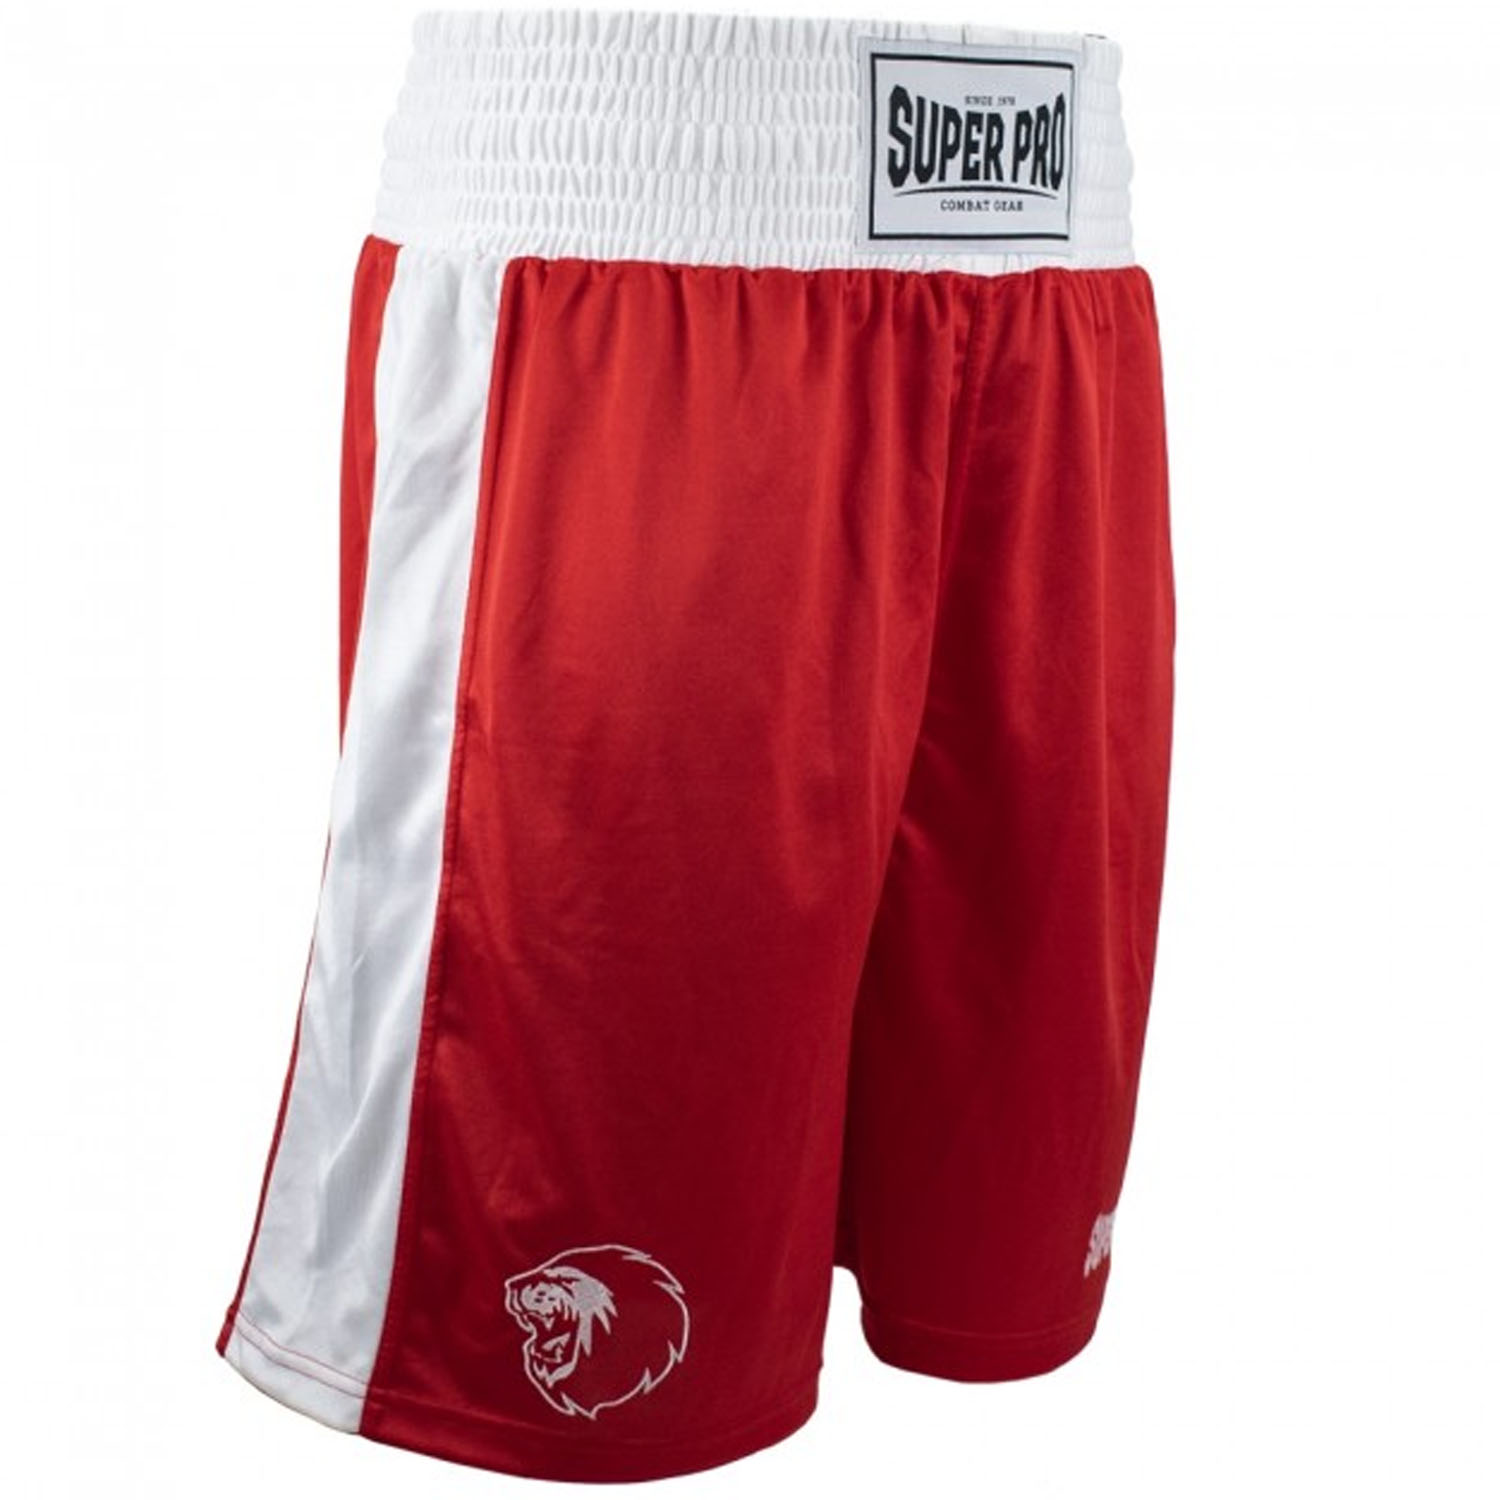 Super Pro Boxhose, Club, rot-weiß, S